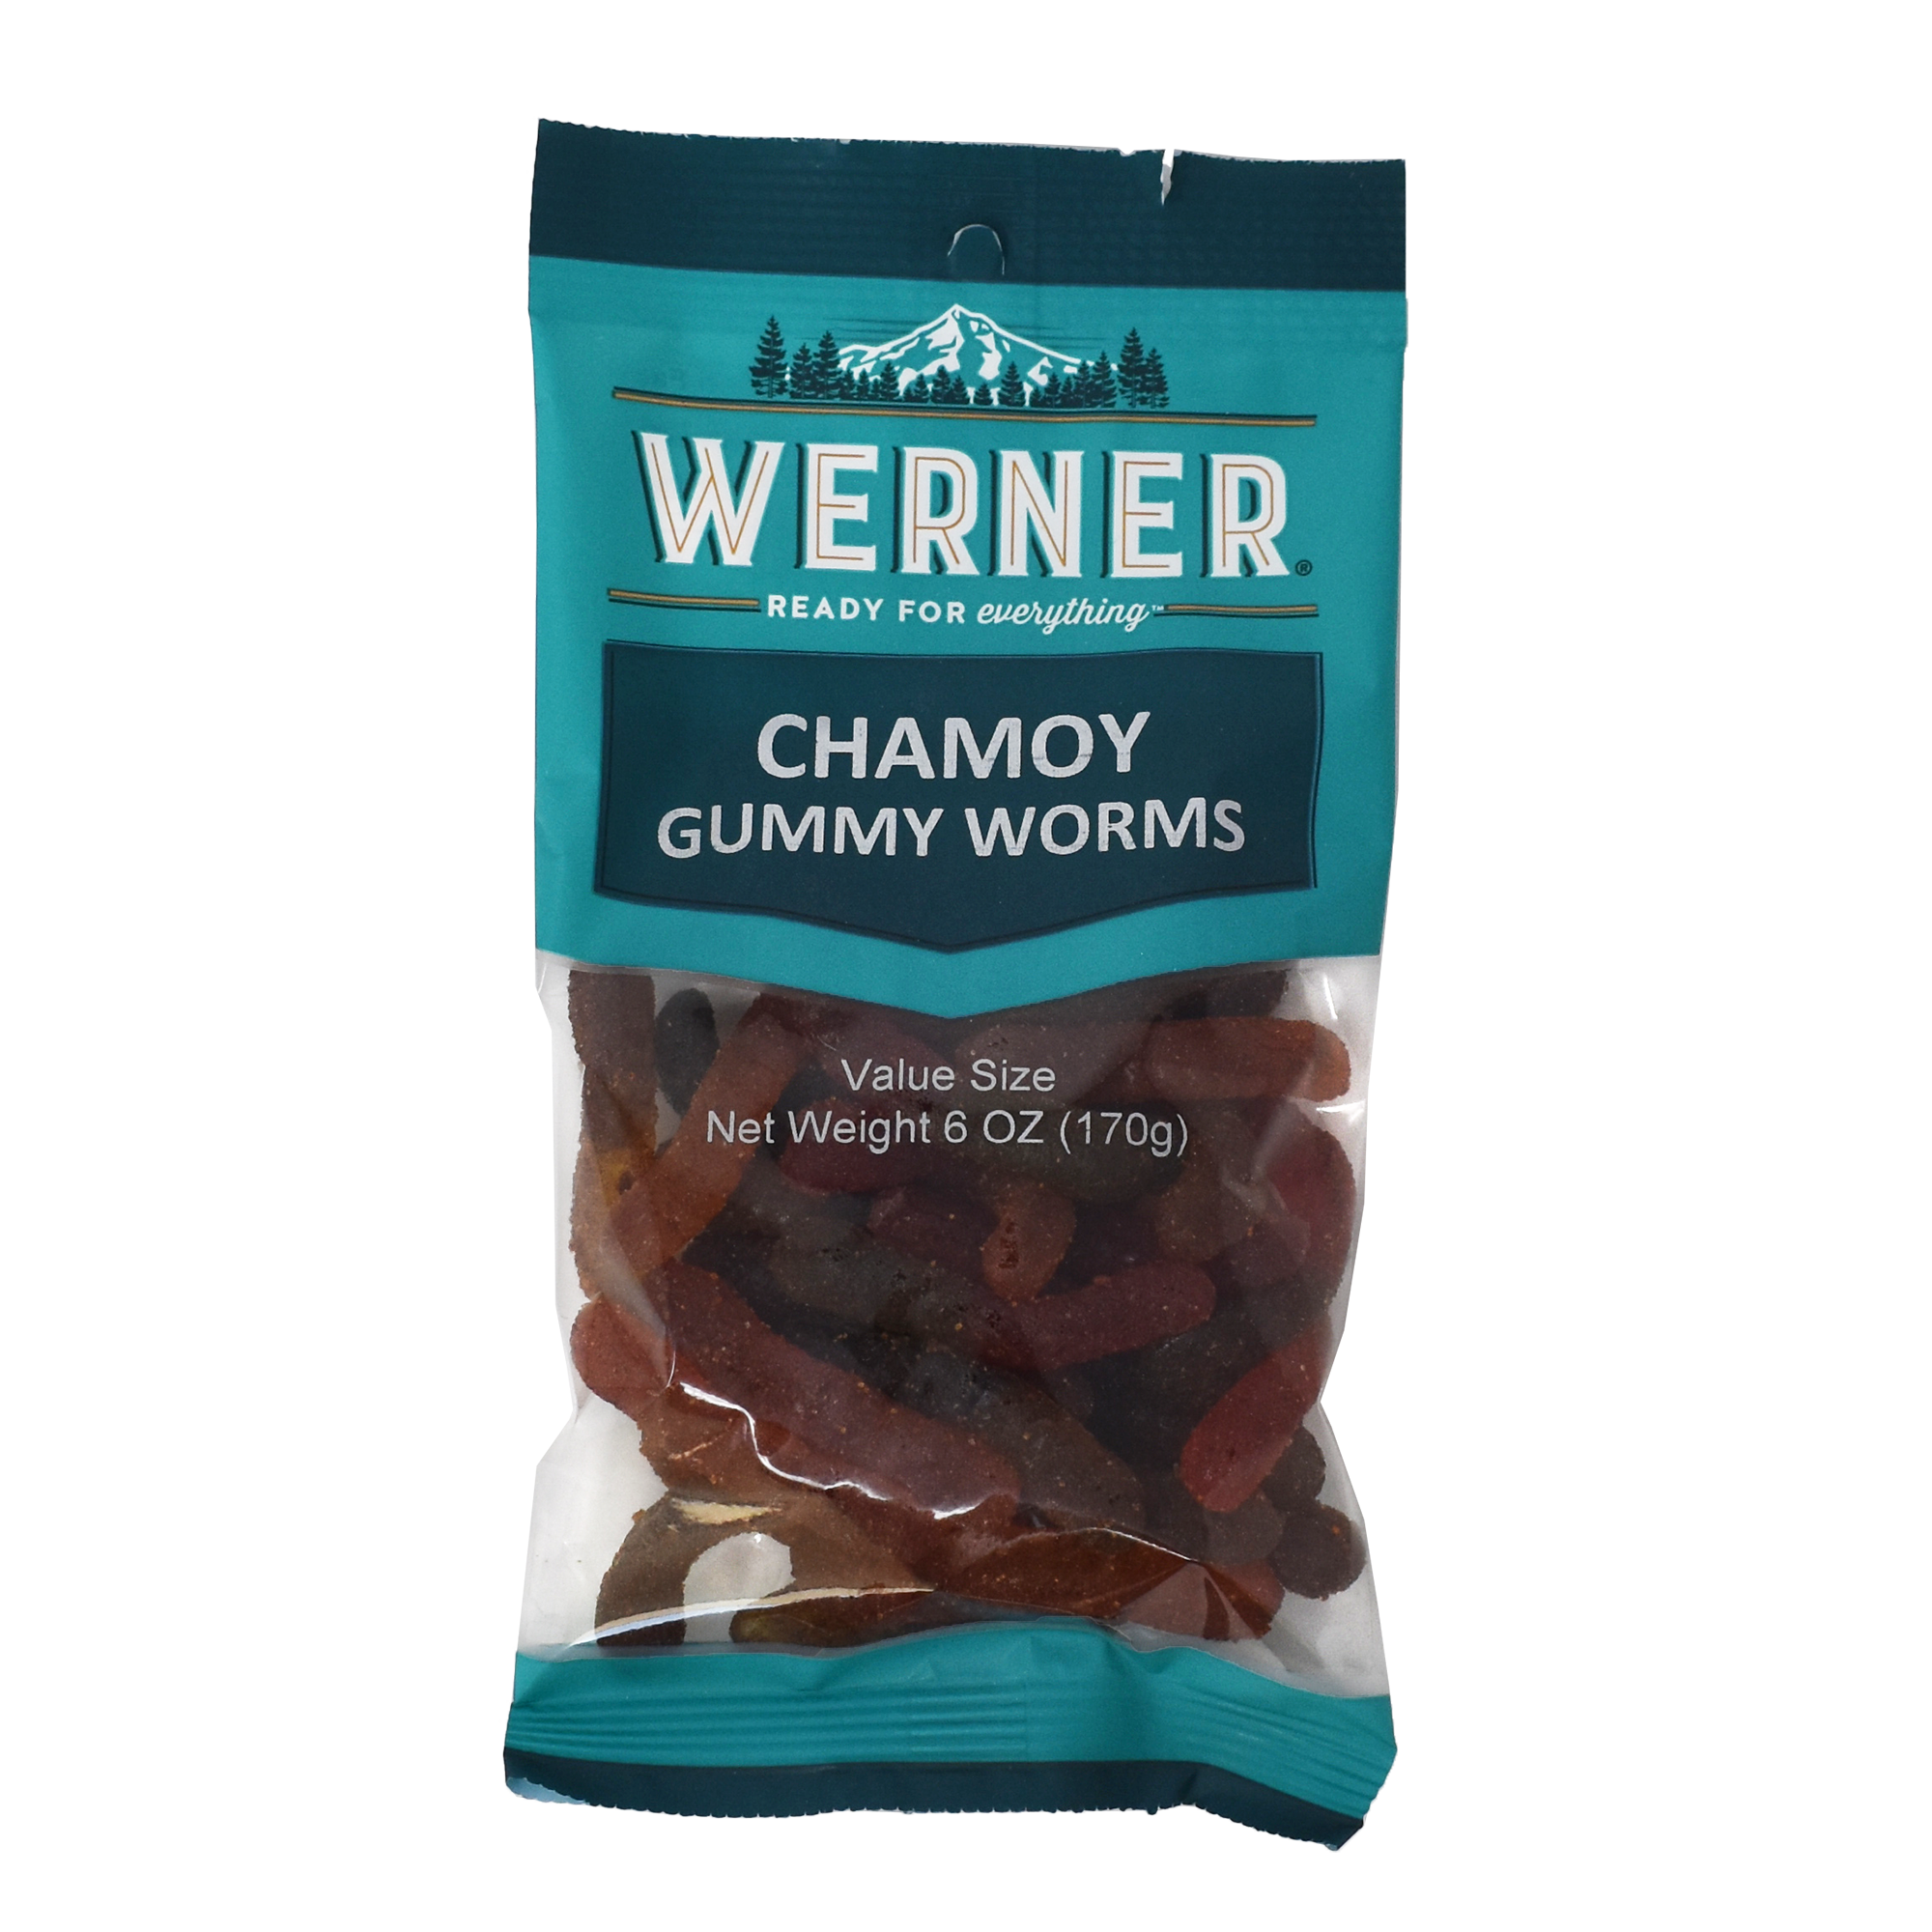 Chamoy Gummy Worms